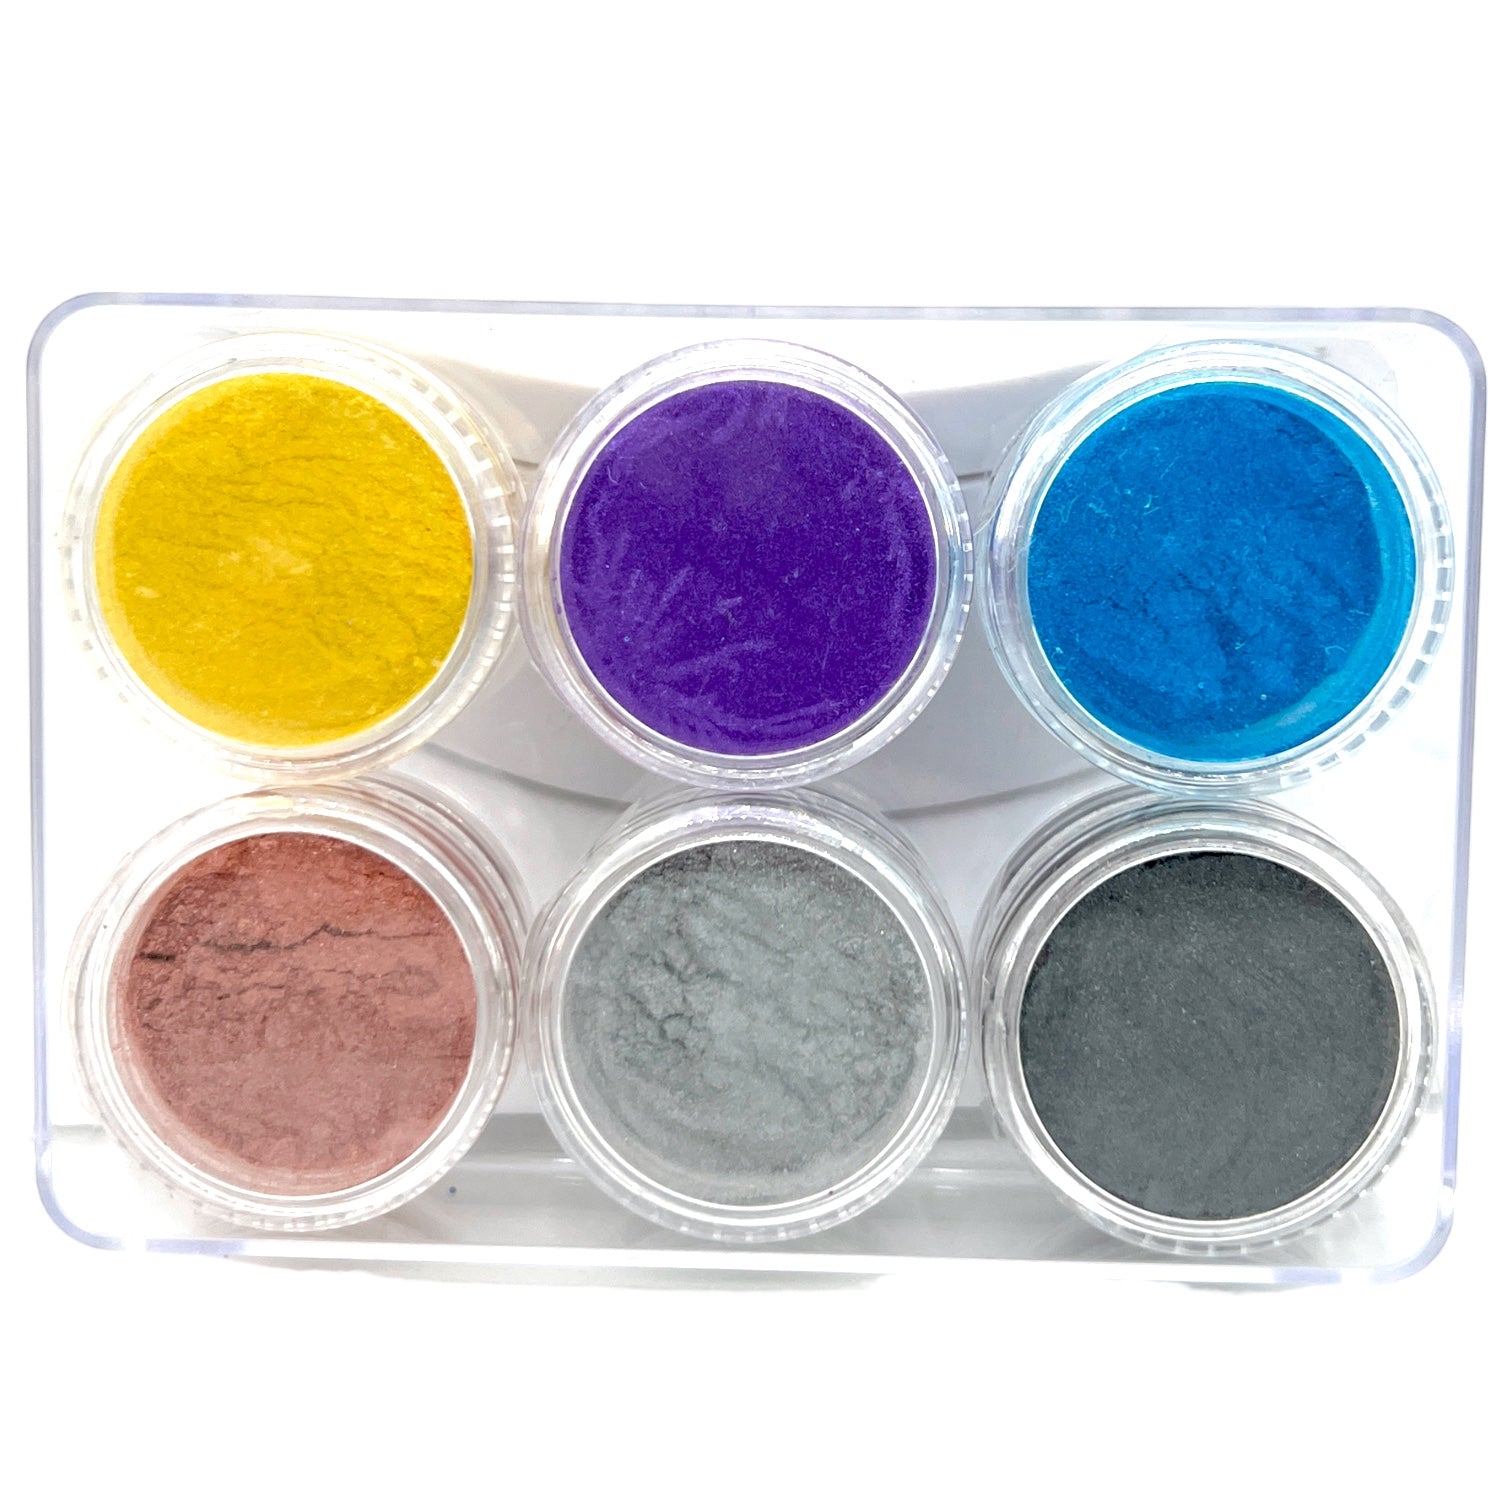 Vibrant Hues Combo Set of Pro Pearl Premium Mica Pigment Powder Epoxy and  UV Resin Art